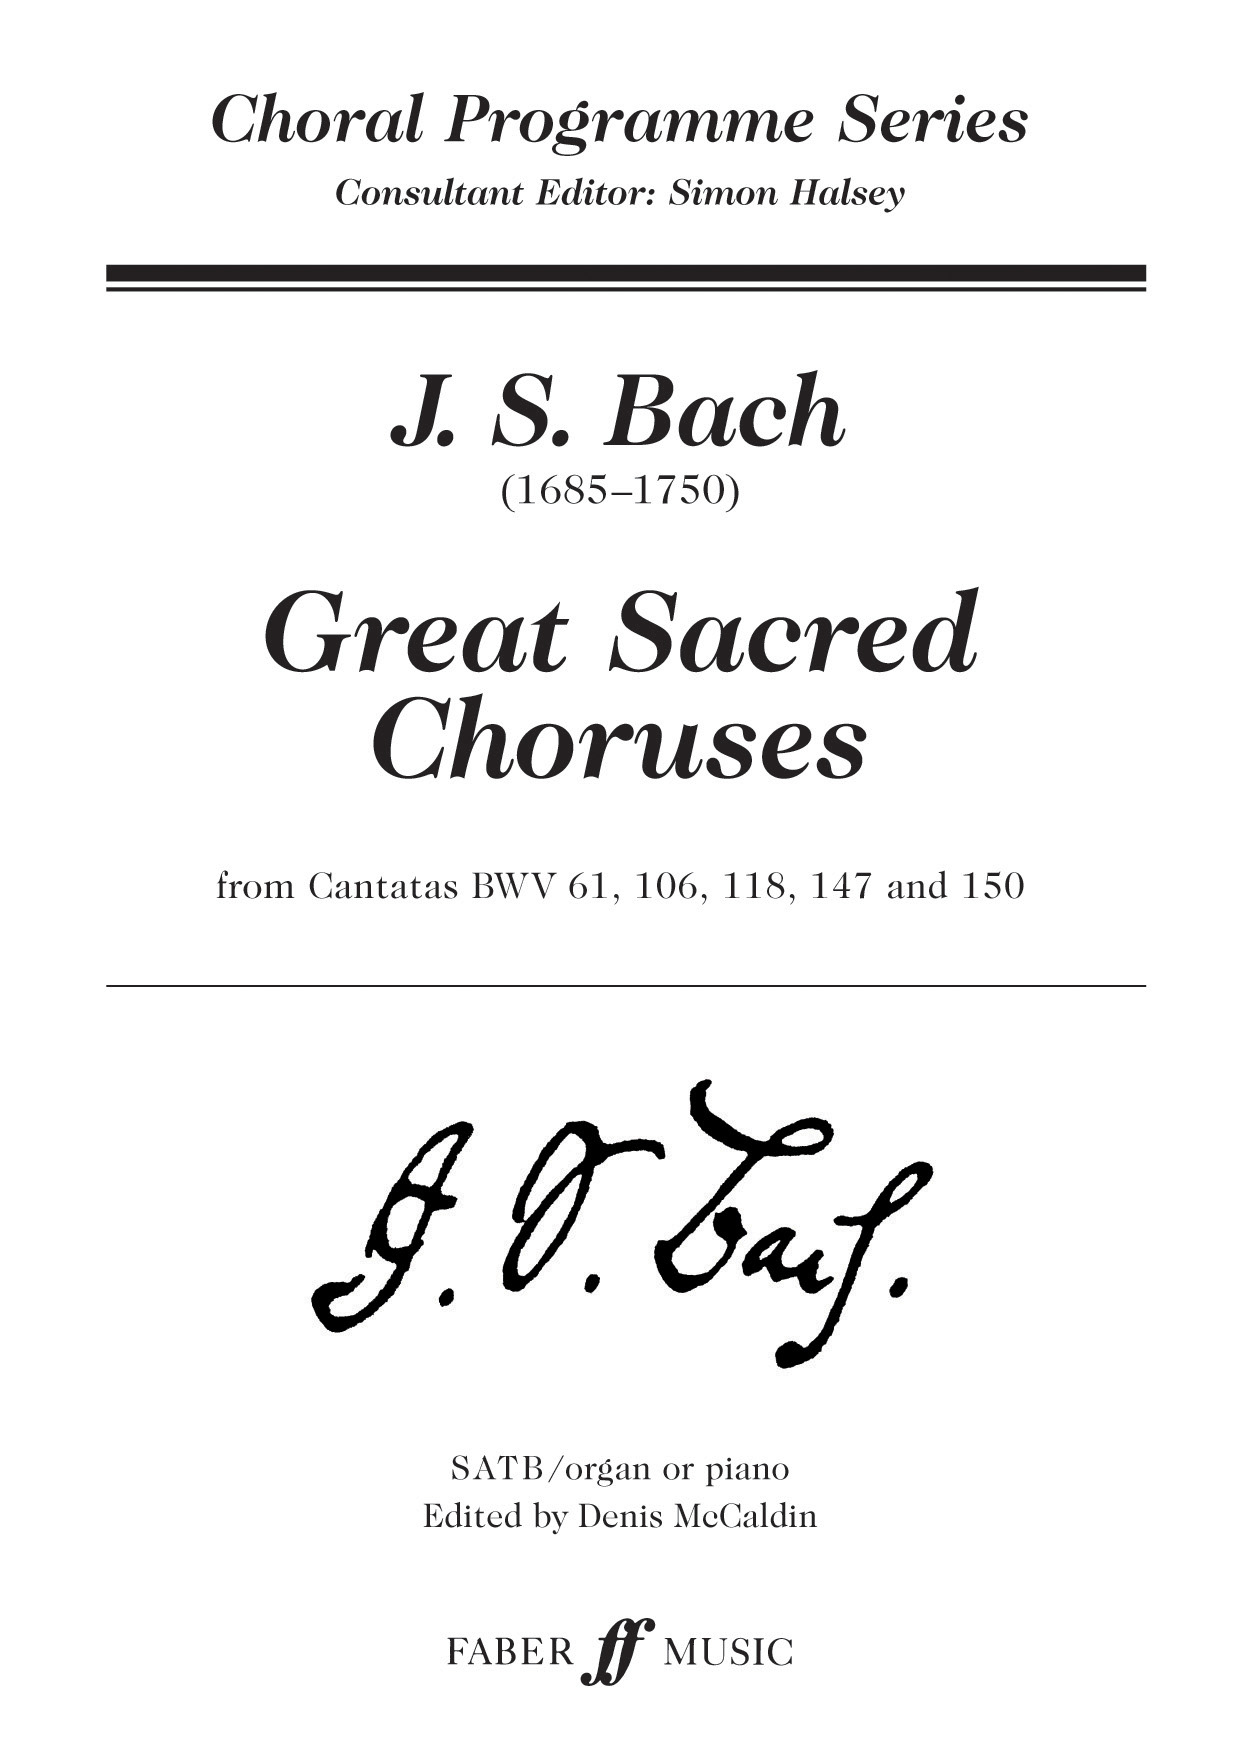 Great Sacred Choruses